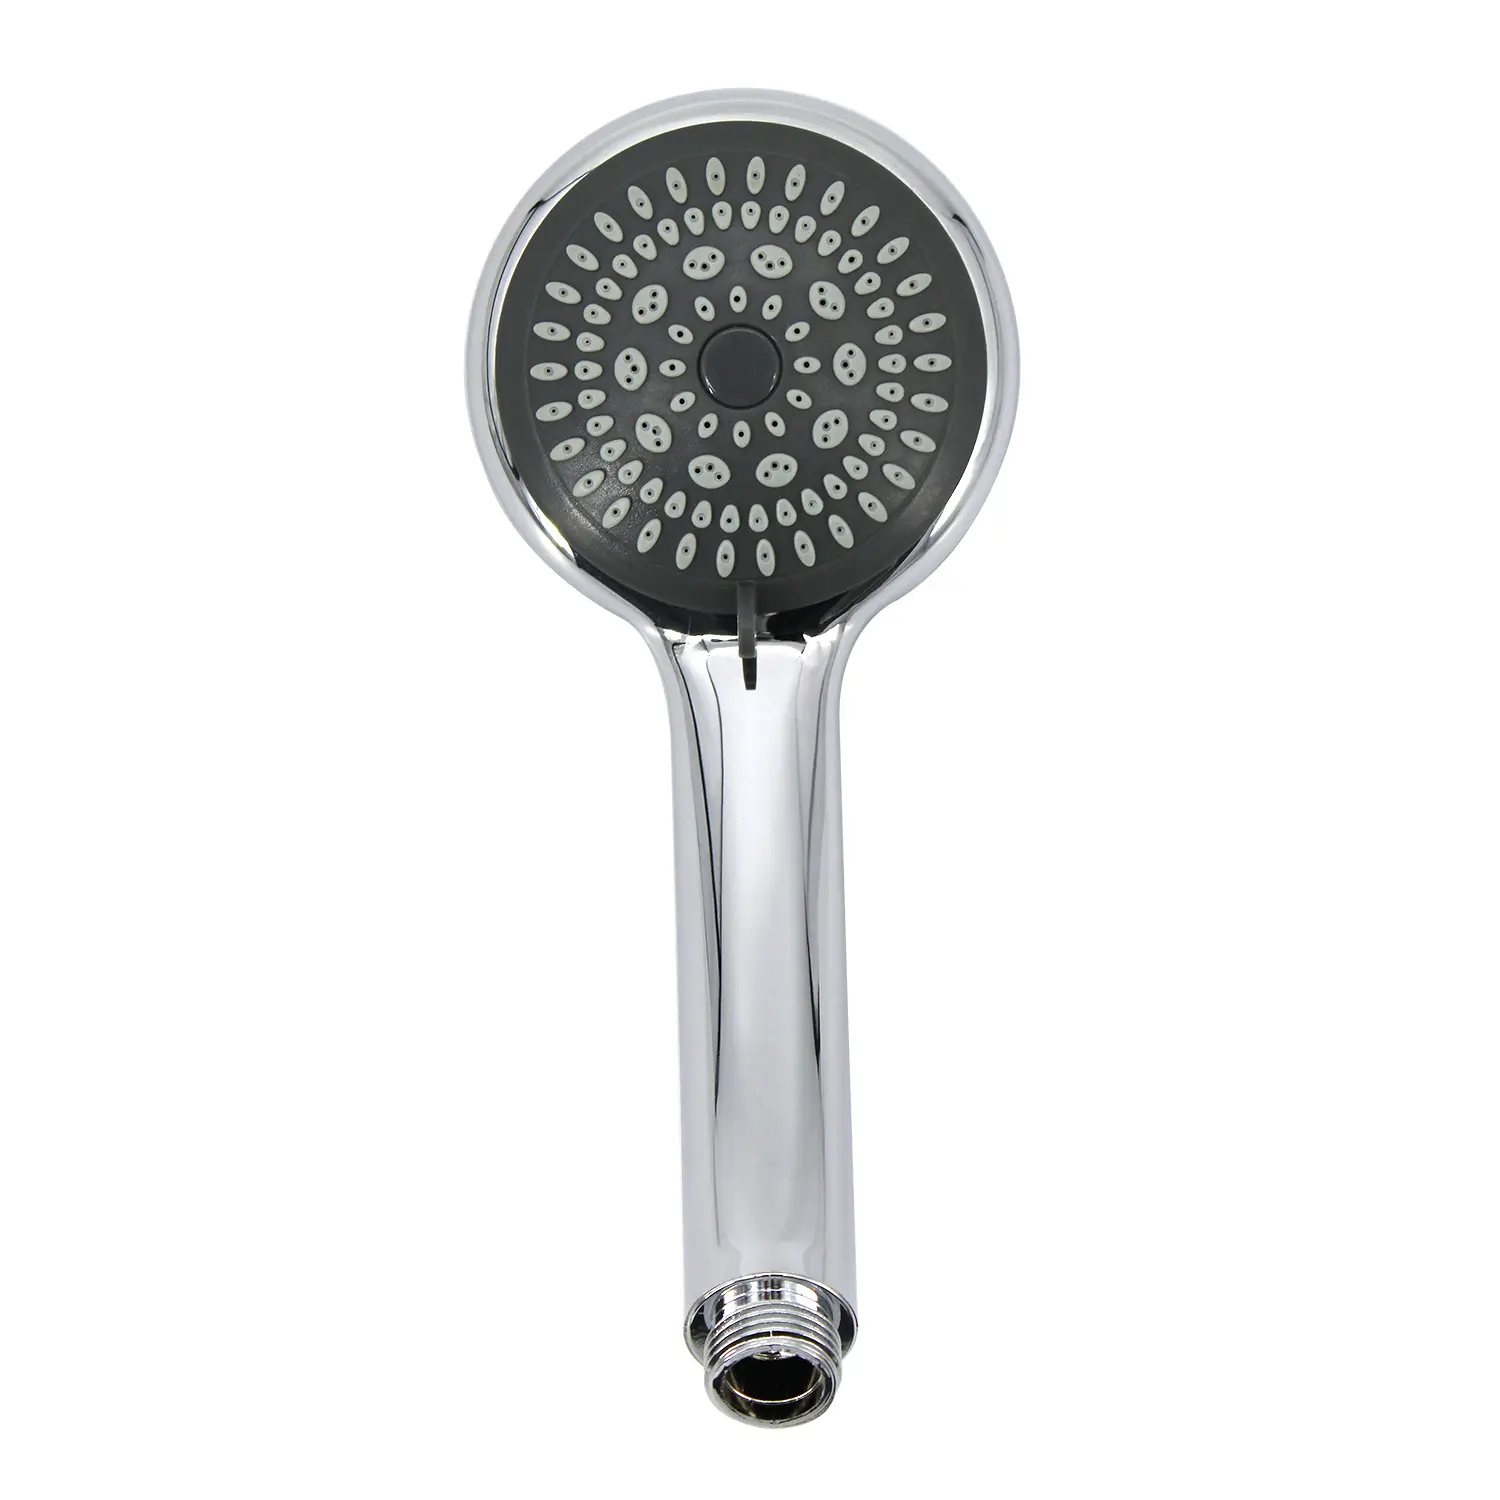 Amazon US Hot Selling shower hand 6 Function Bathroom Rainproof High Pressure Shower Head